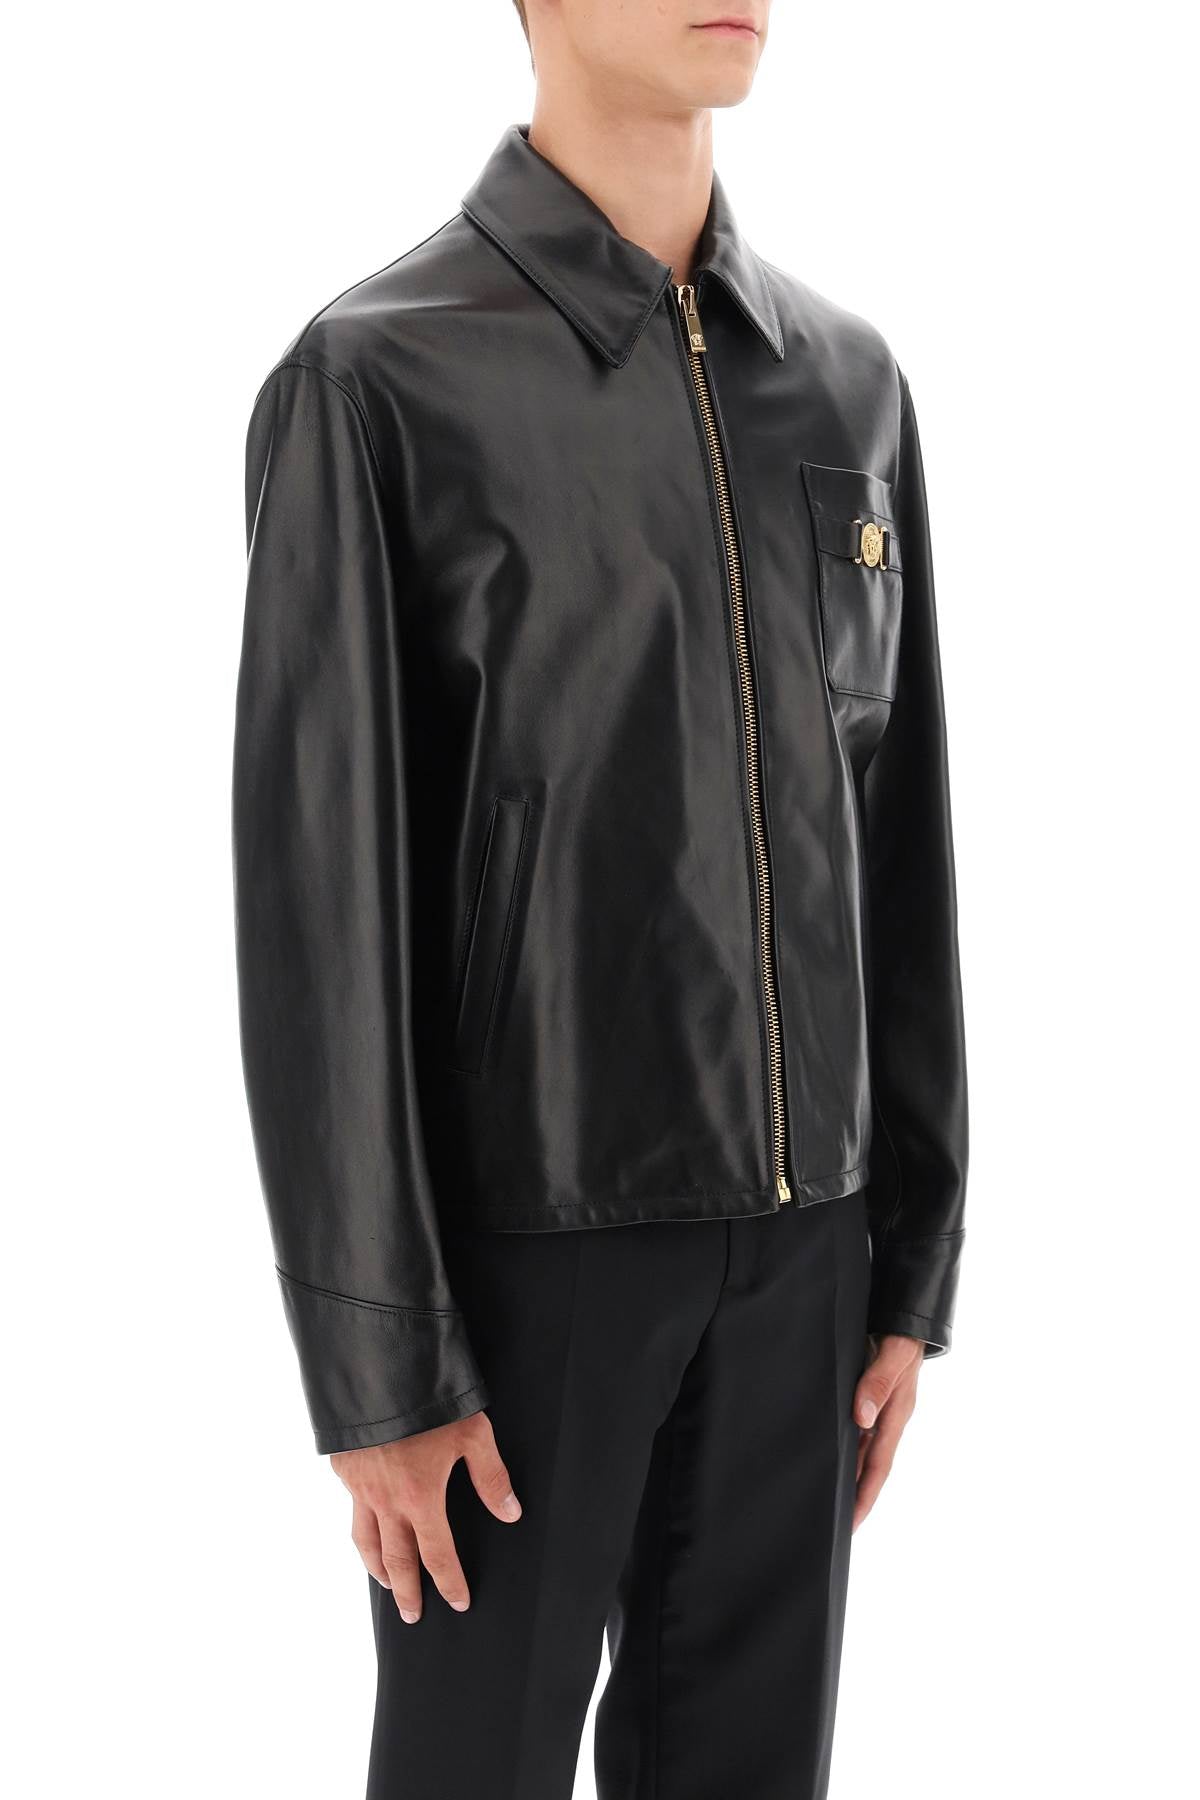 Versace leather blouse jacket-1